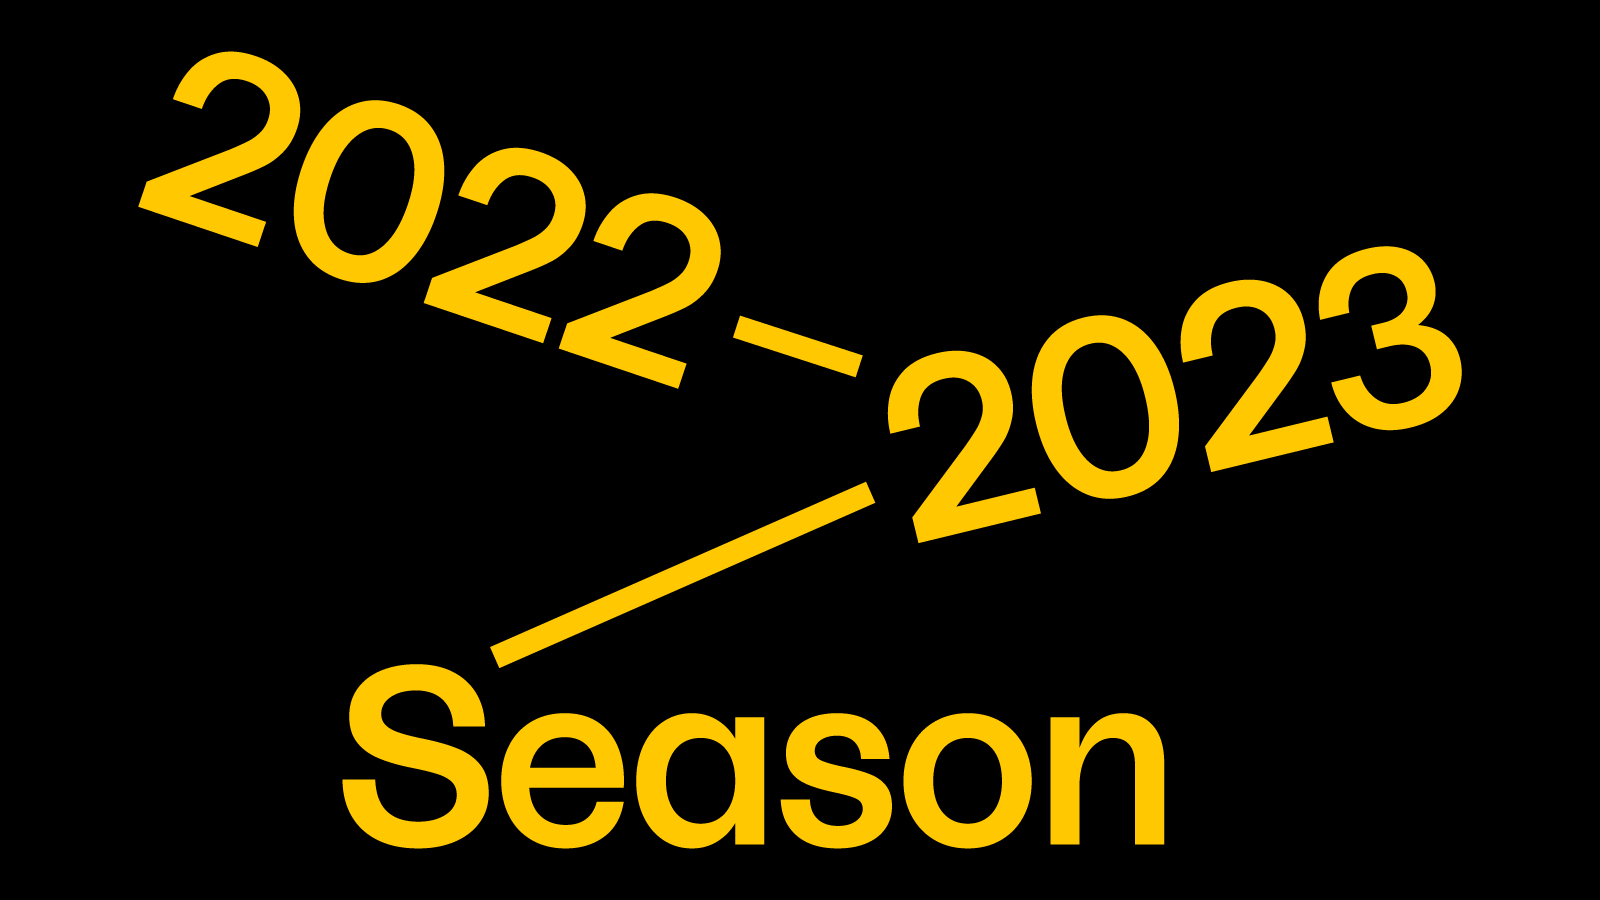 22.23 Season